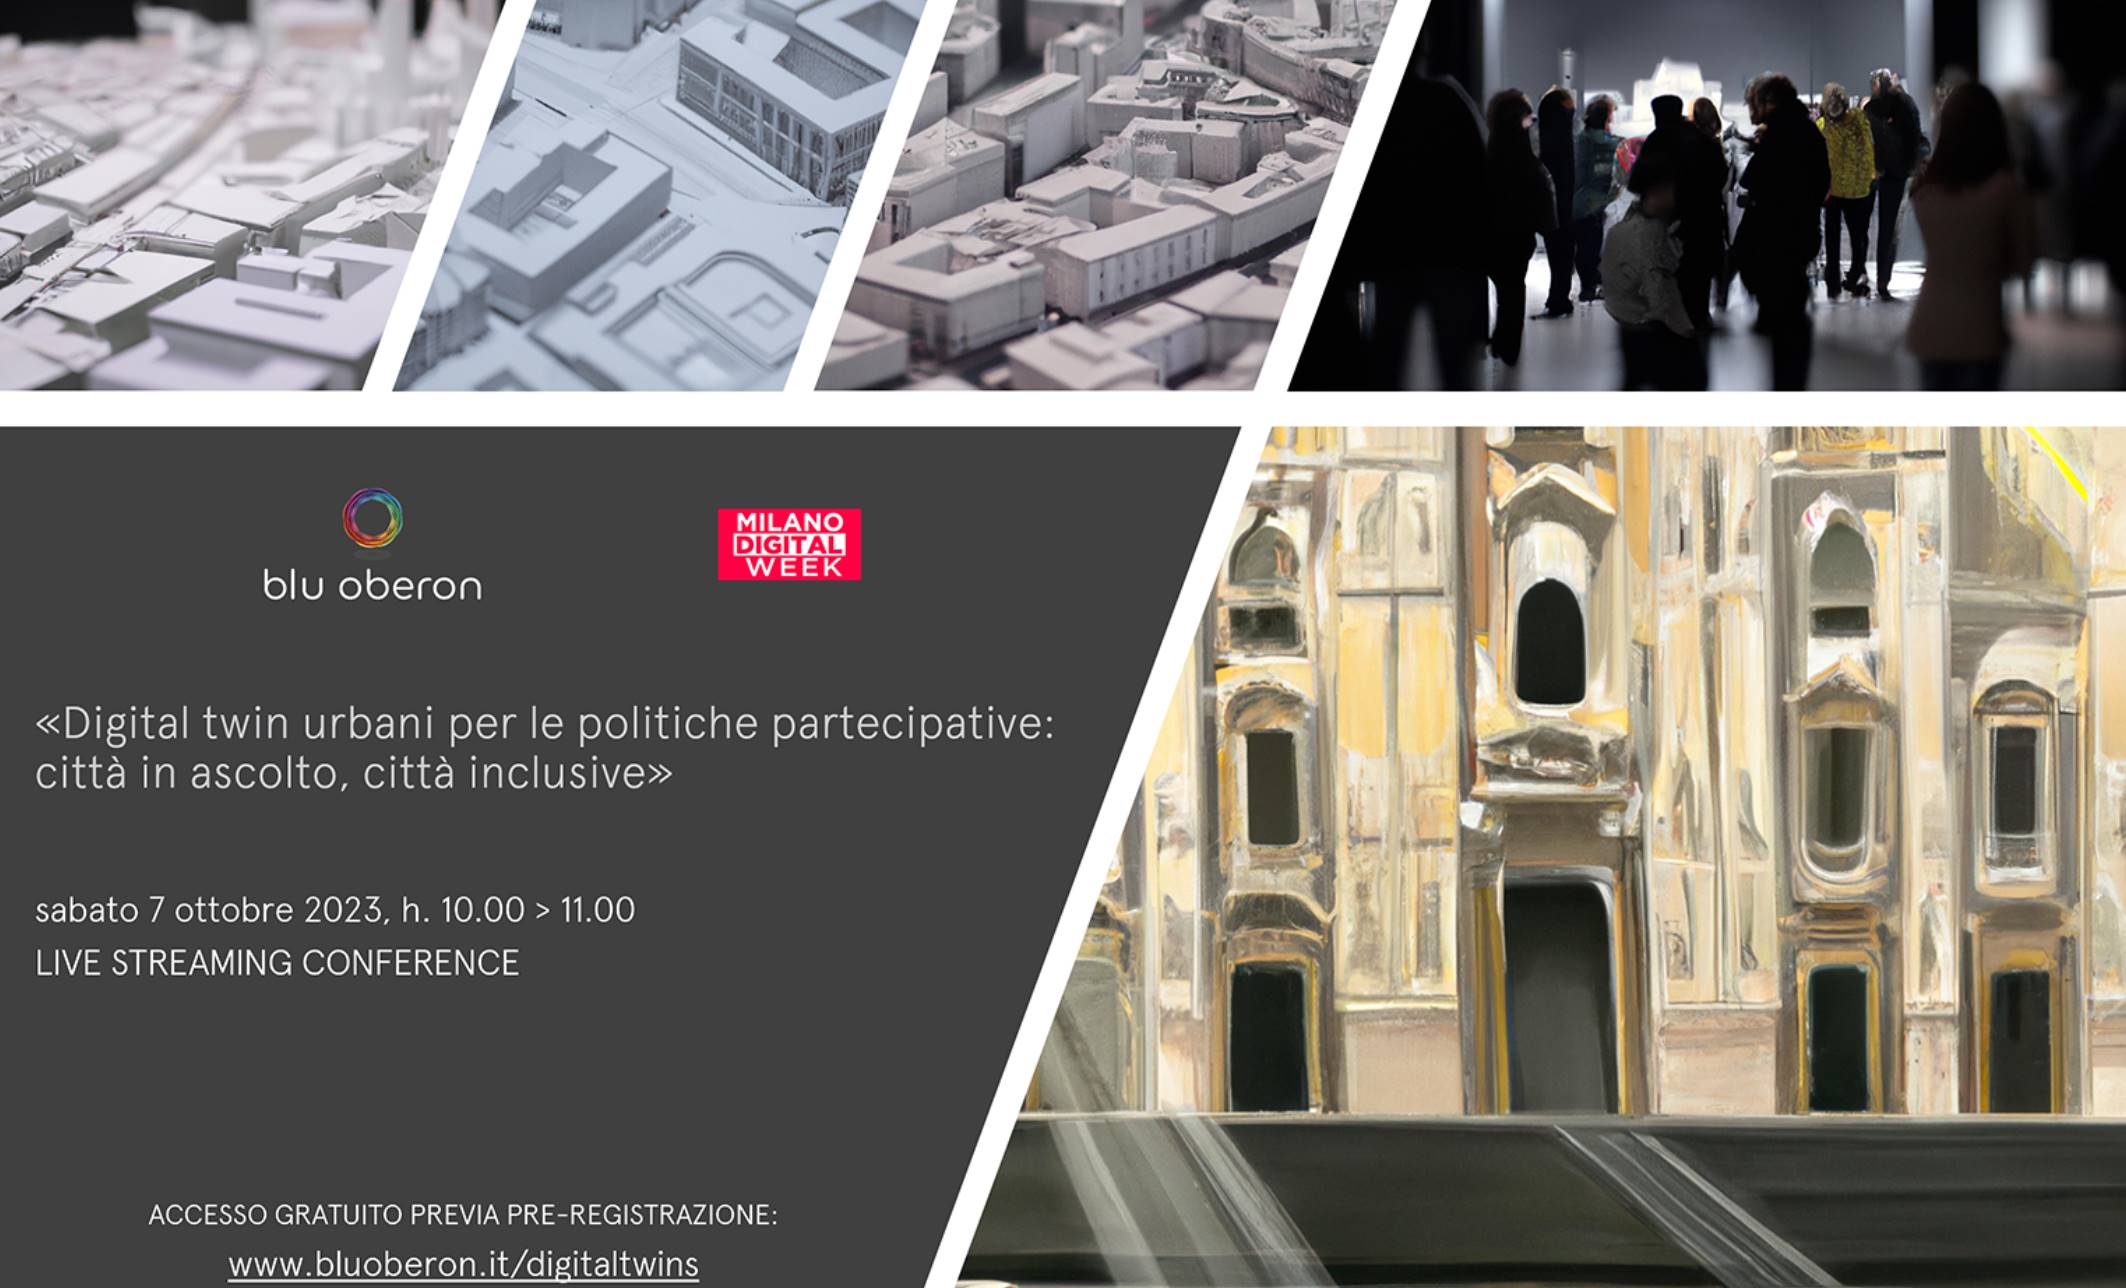 Blu Oberon alla Milano Digital Week per il Gemello Digitale 